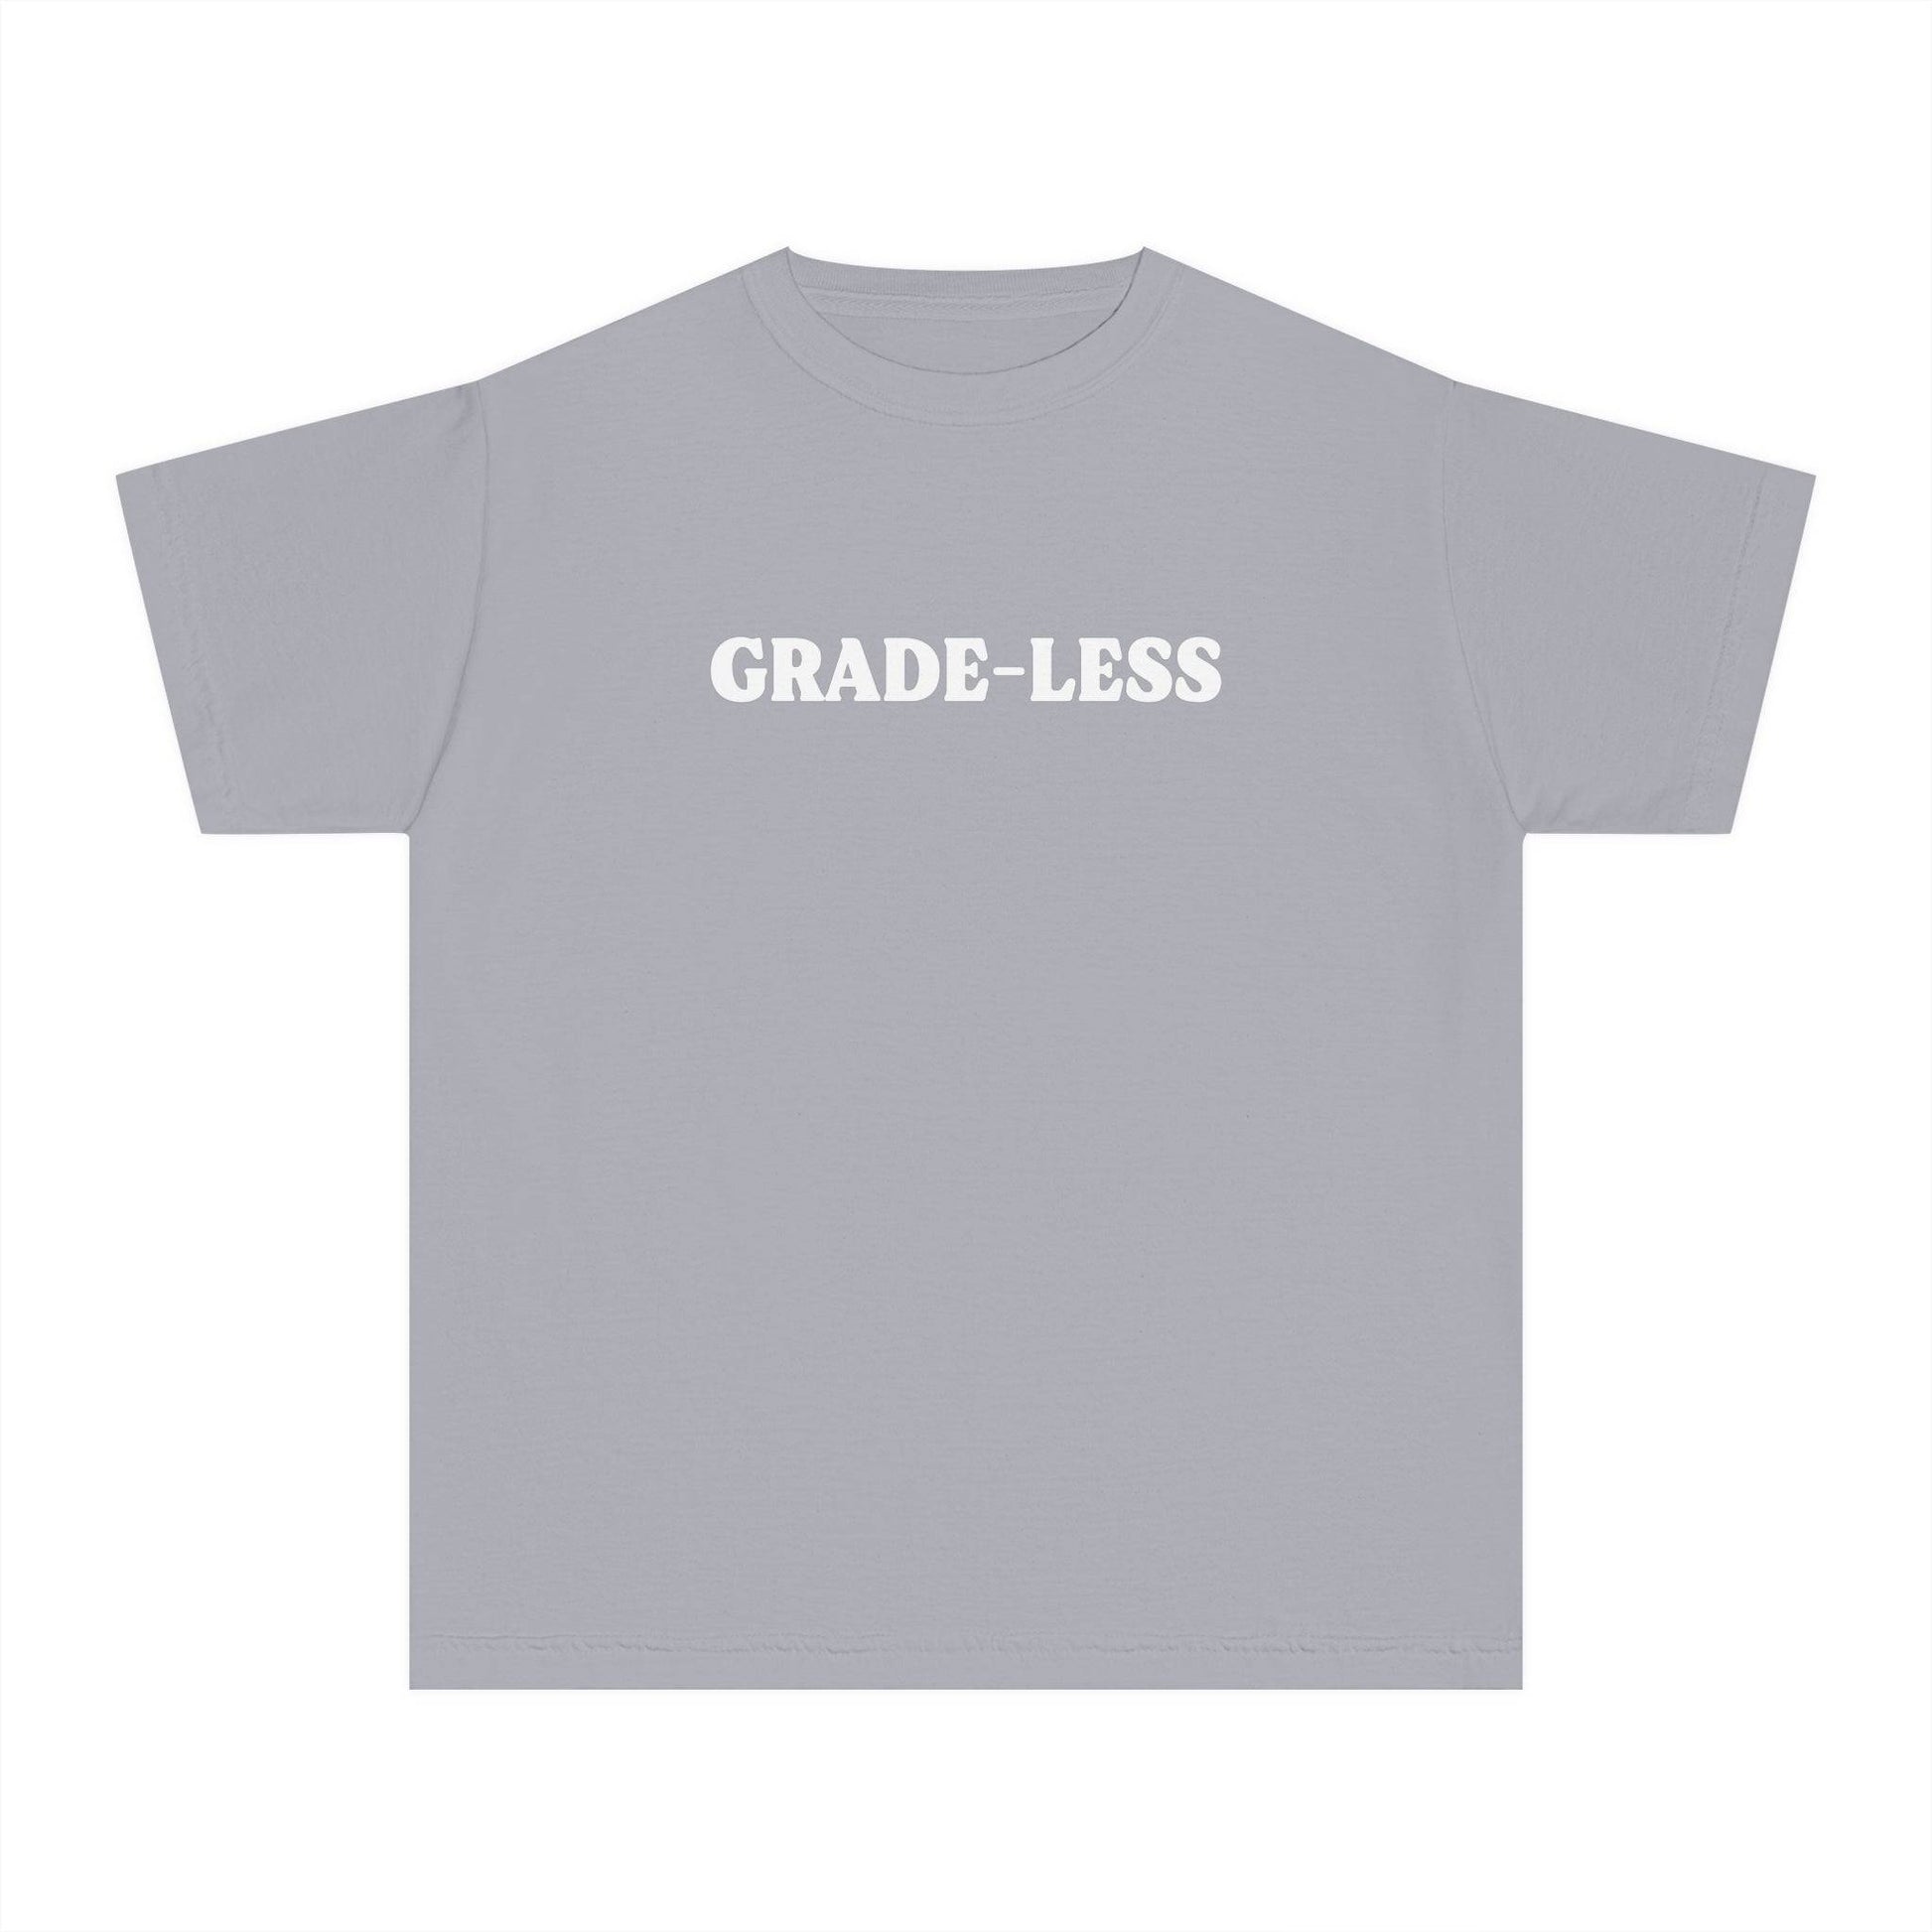 Grade-less Kids Funny Tee Shirt for Homeschoolers